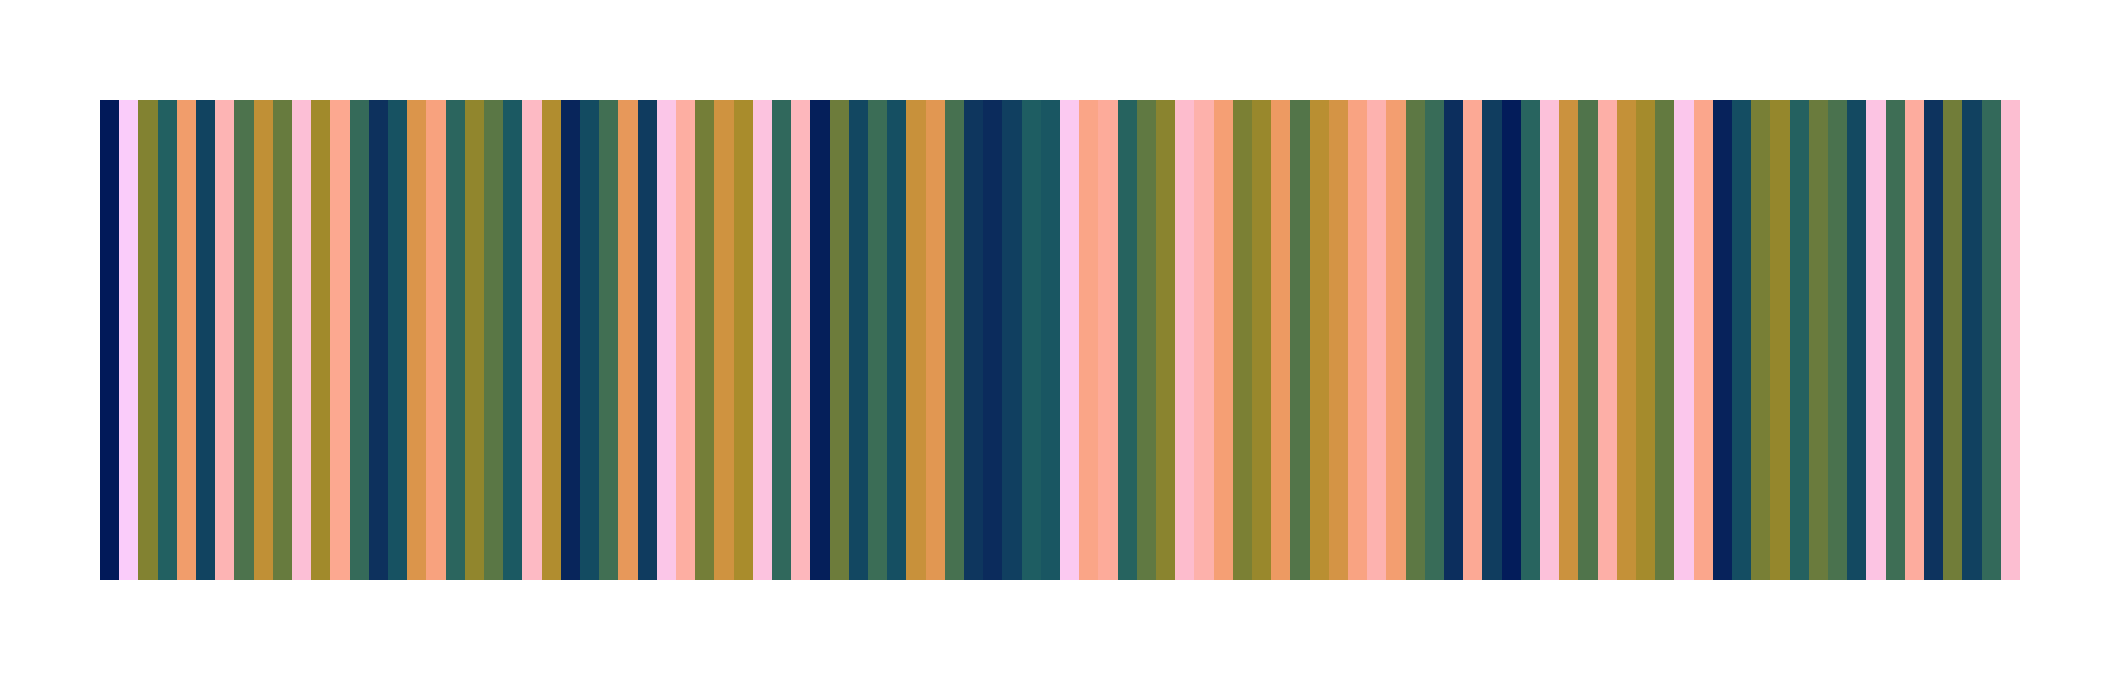 batlowS categorical scientific color palette by Fabio Crameri